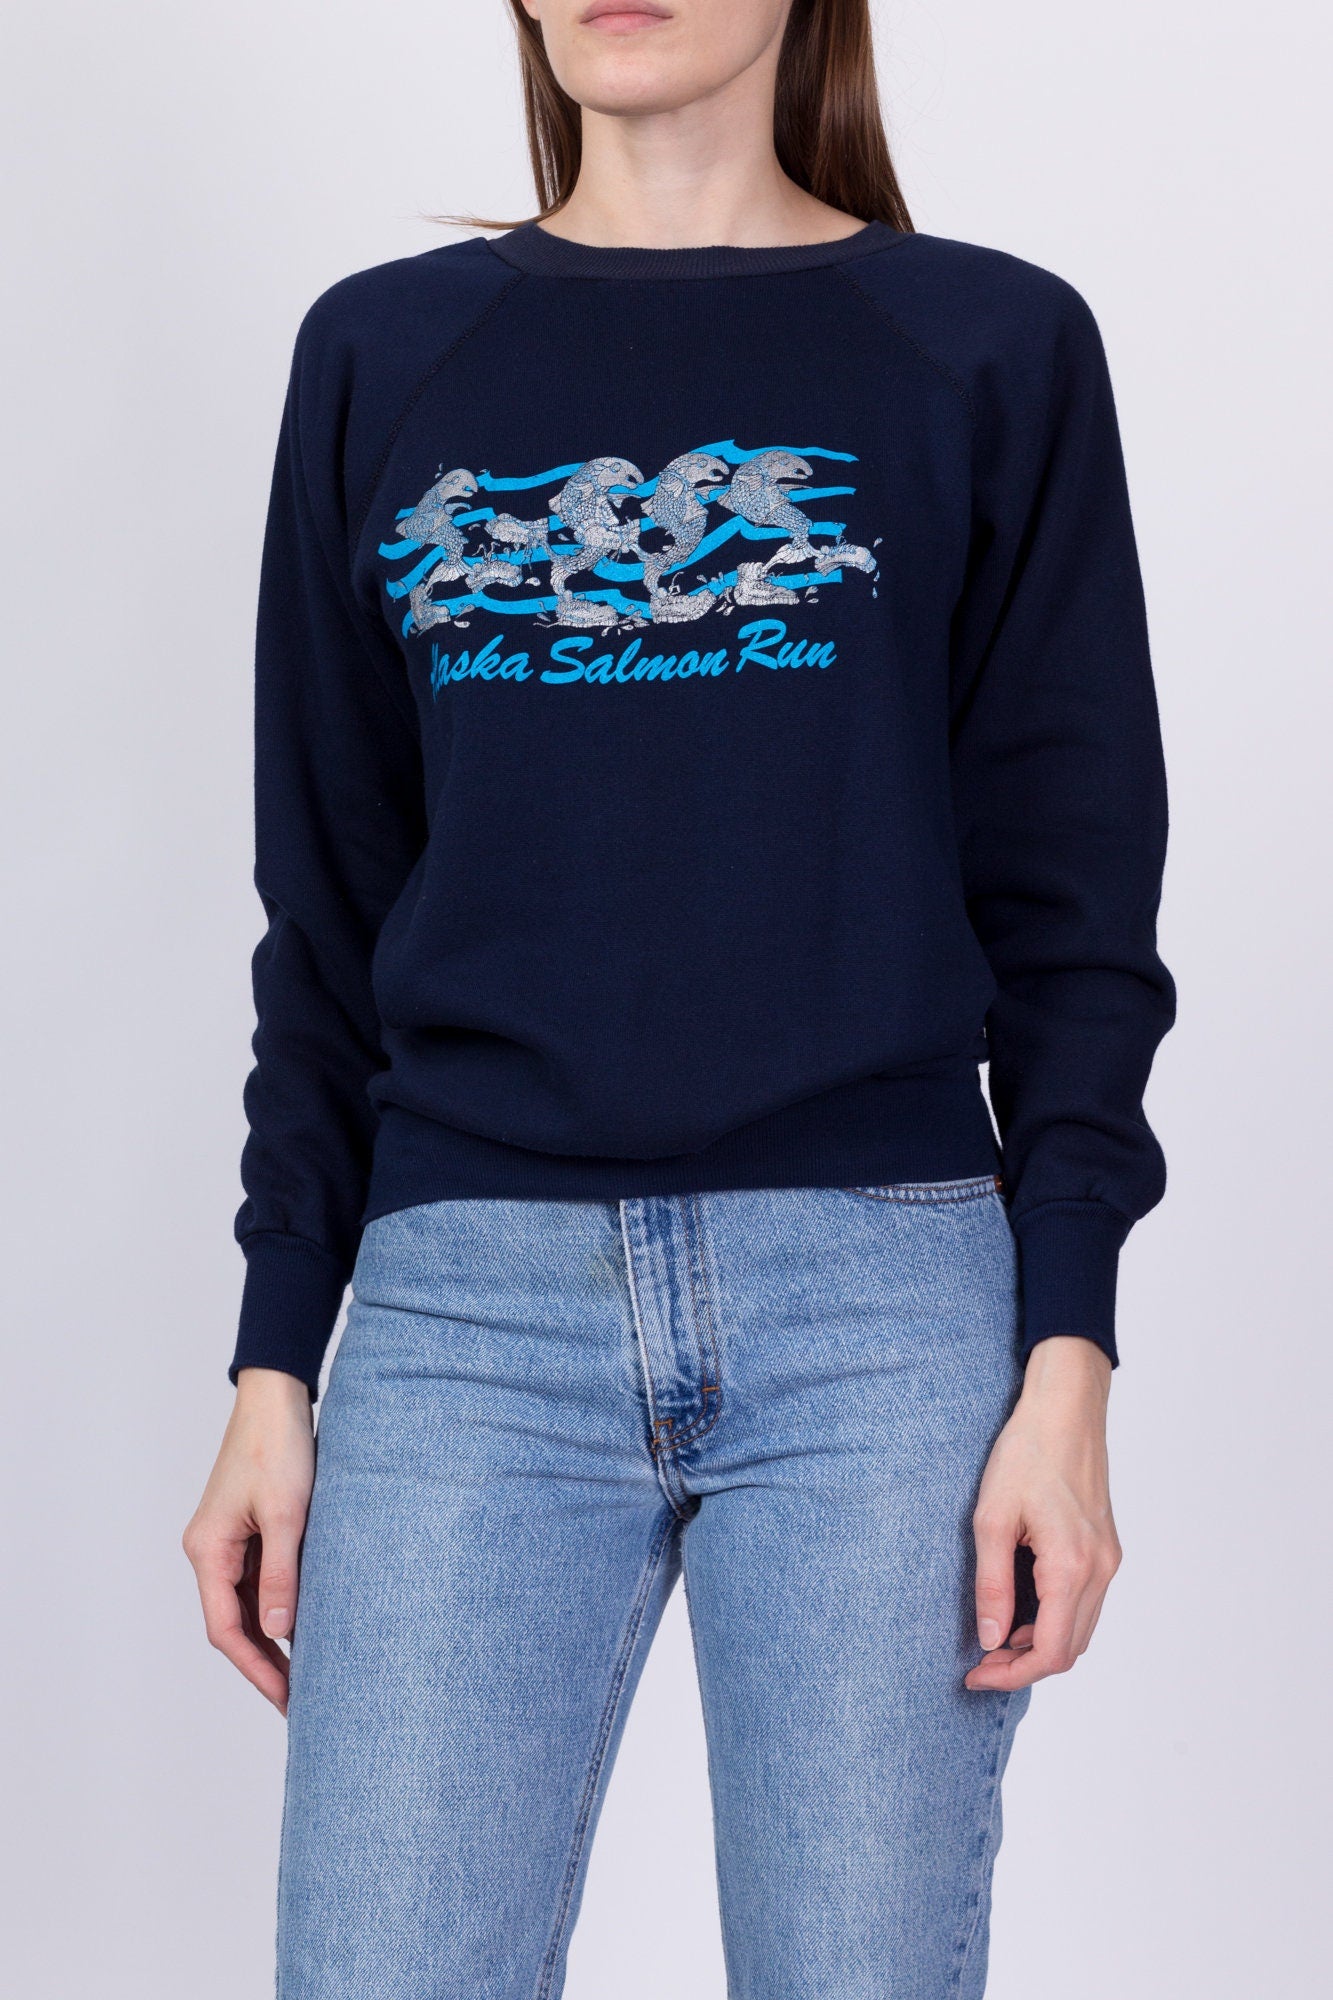 80s Alaska Salmon Run Sweatshirt - Men's XS, Women's Small 